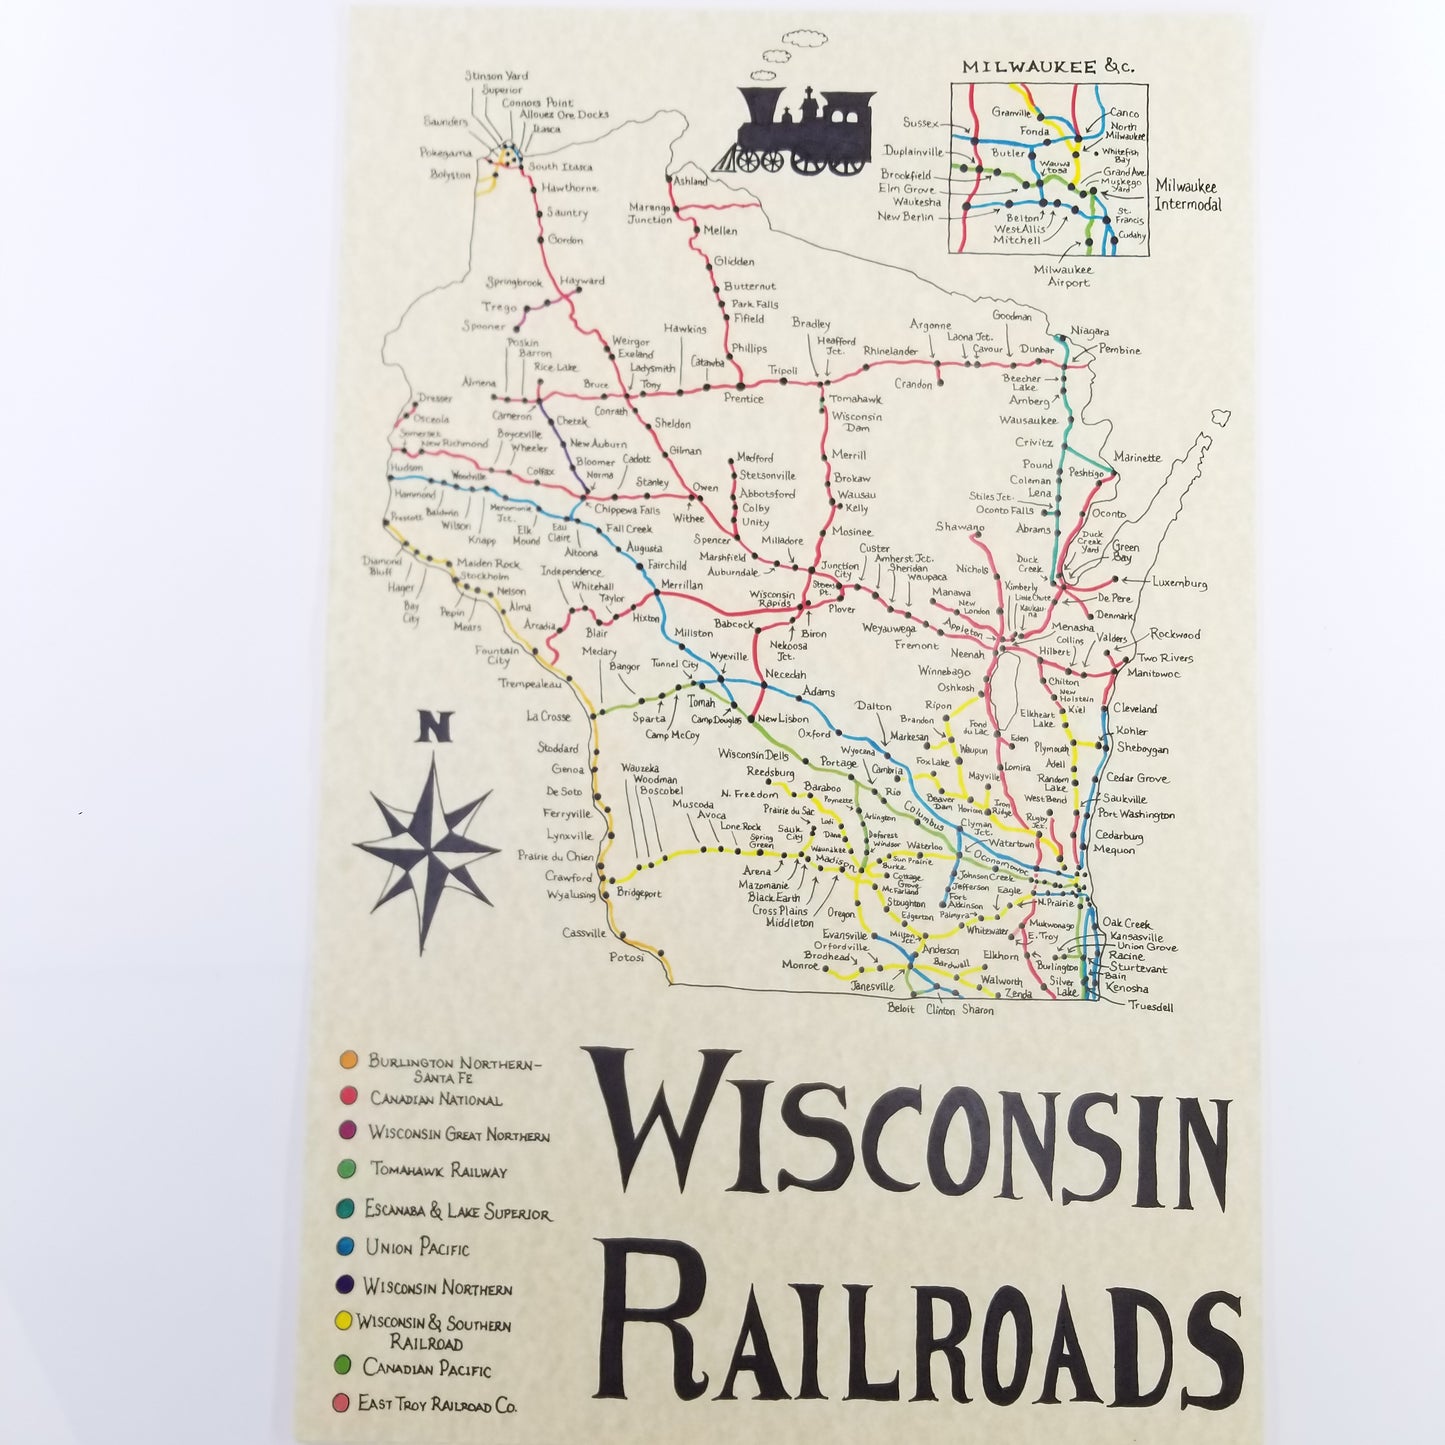 Railroads of Wisconsin collectors edition 